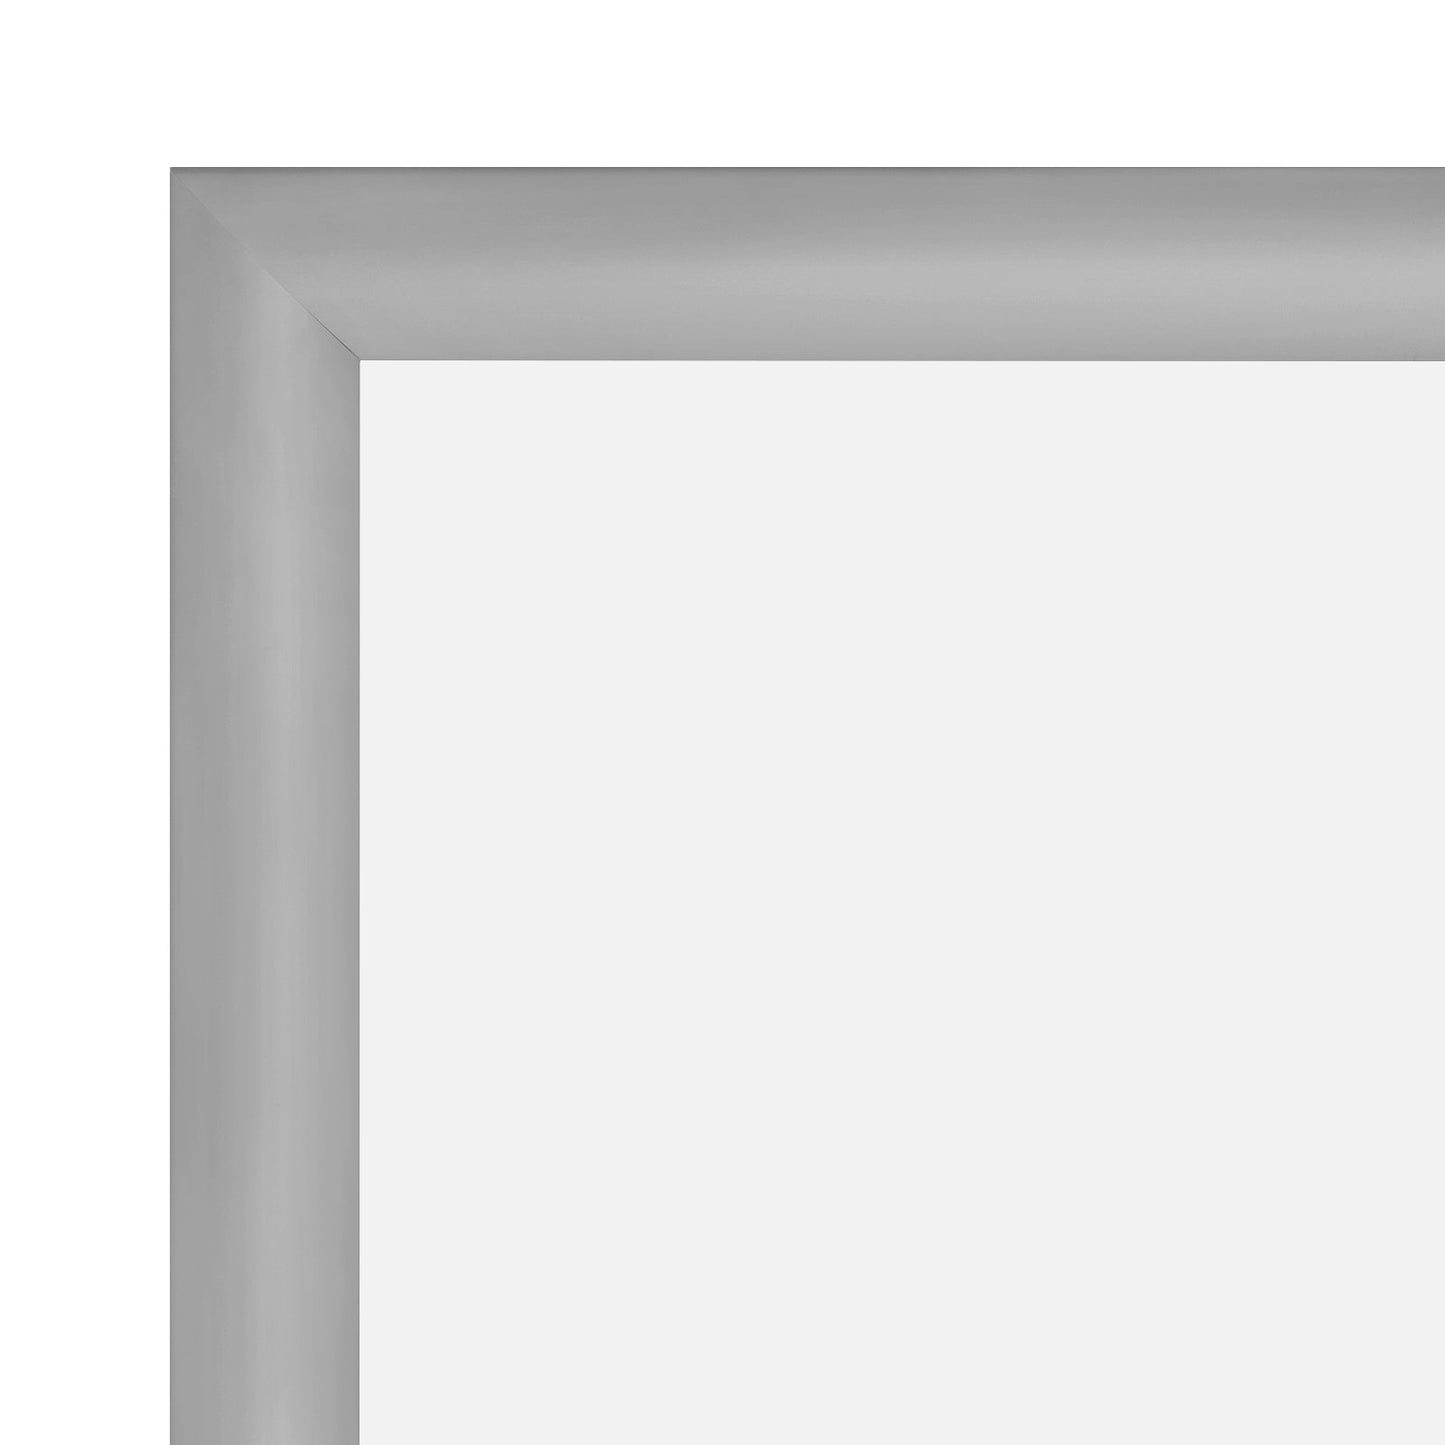 26x36 Silver SnapeZo® Snap Frame - 1.2" Profile - Snap Frames Direct